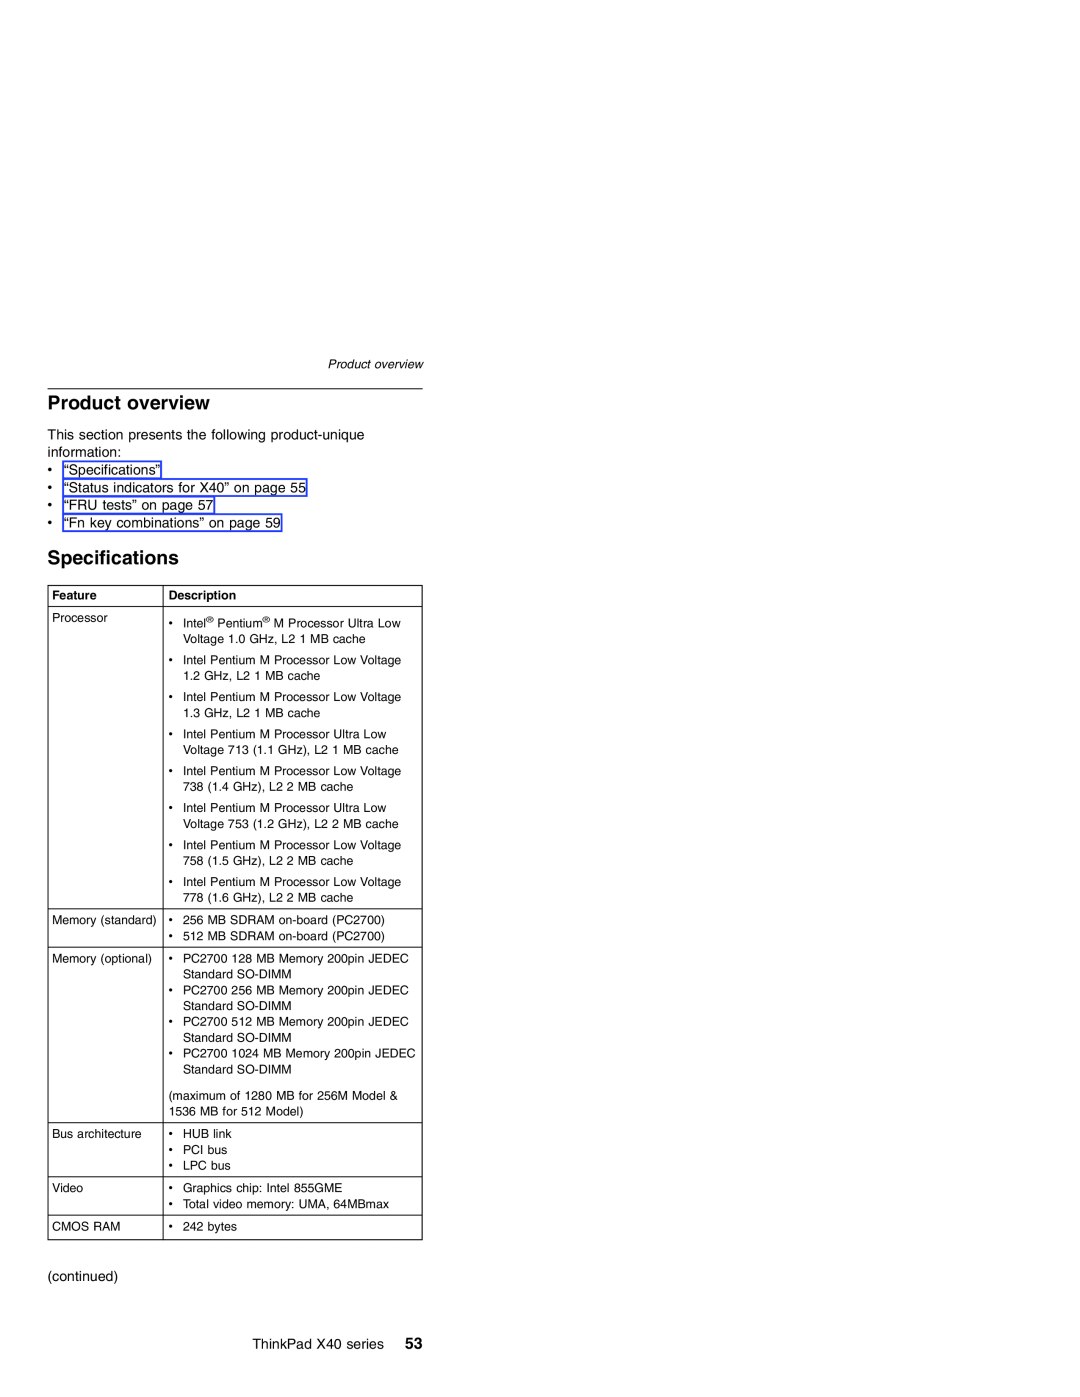 Lenovo MT 2369 manual Product overview, Specifications, Feature, Description 